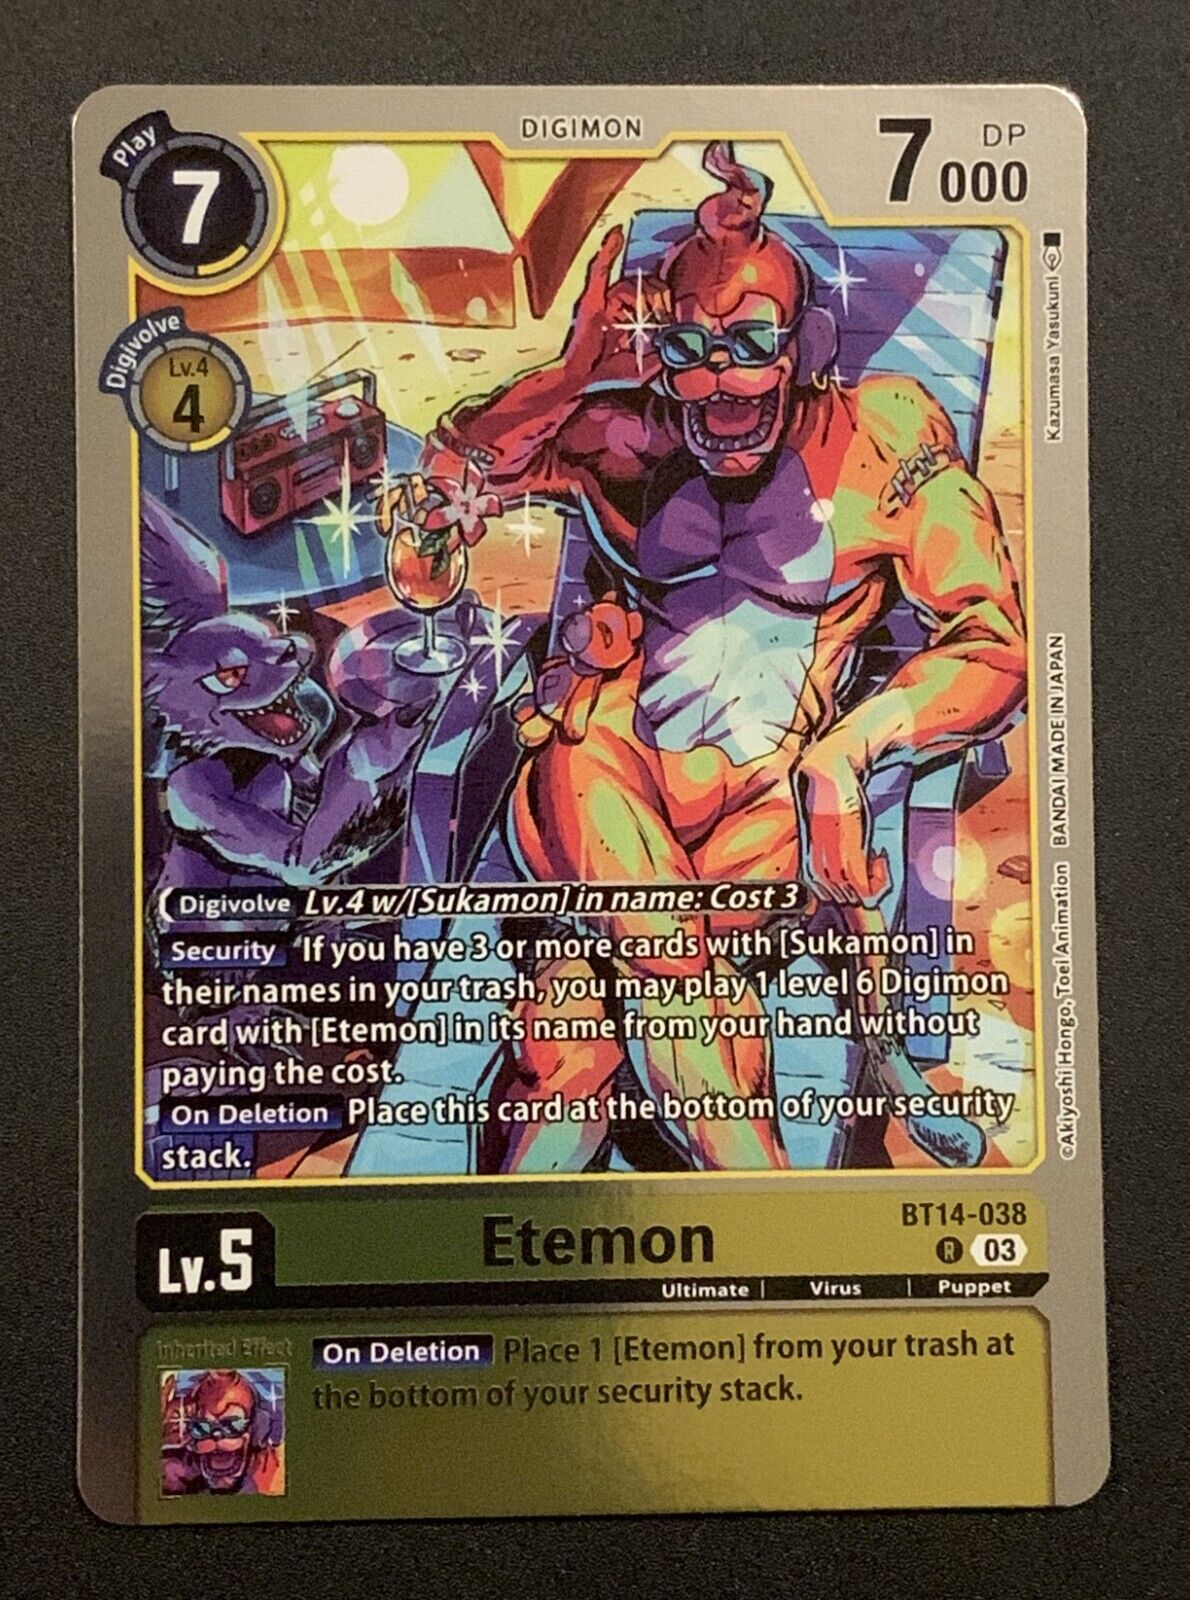 Etemon - BT14-038 R - Yellow - Blast Ace - Digimon TCG